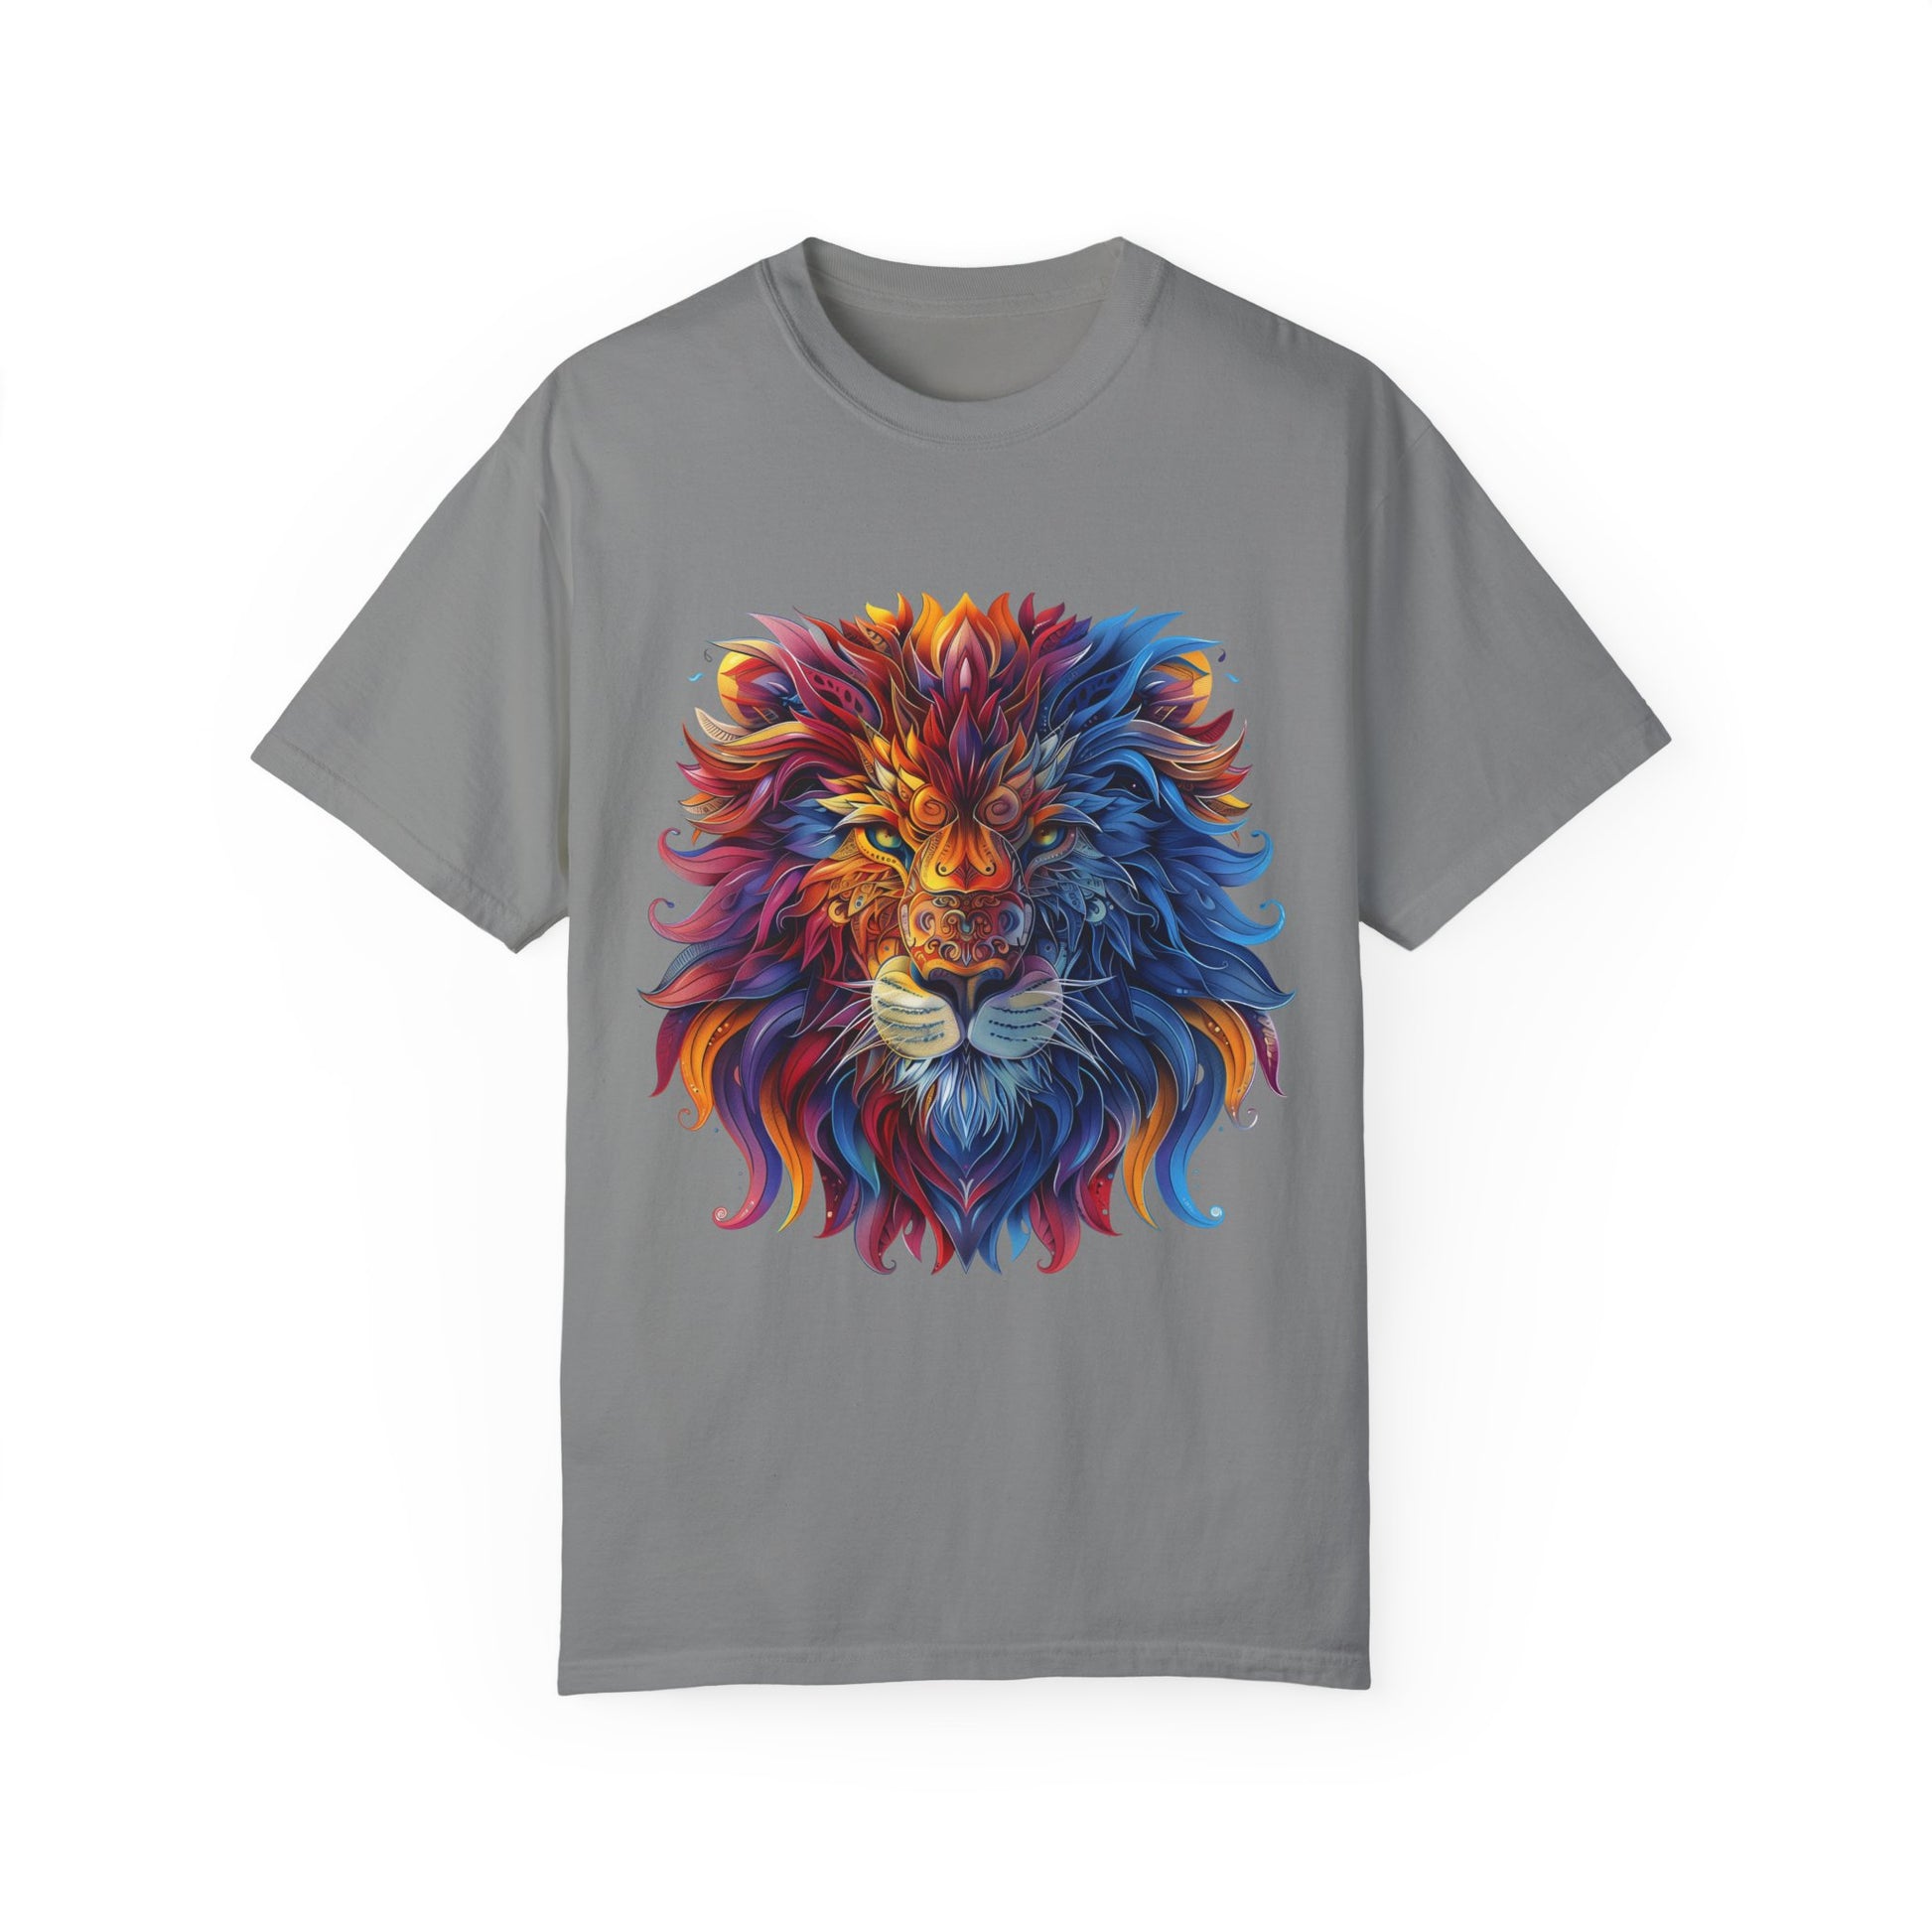 Lion Head Cool Graphic Design Novelty Unisex Garment-dyed T-shirt Cotton Funny Humorous Graphic Soft Premium Unisex Men Women Granite T-shirt Birthday Gift-4